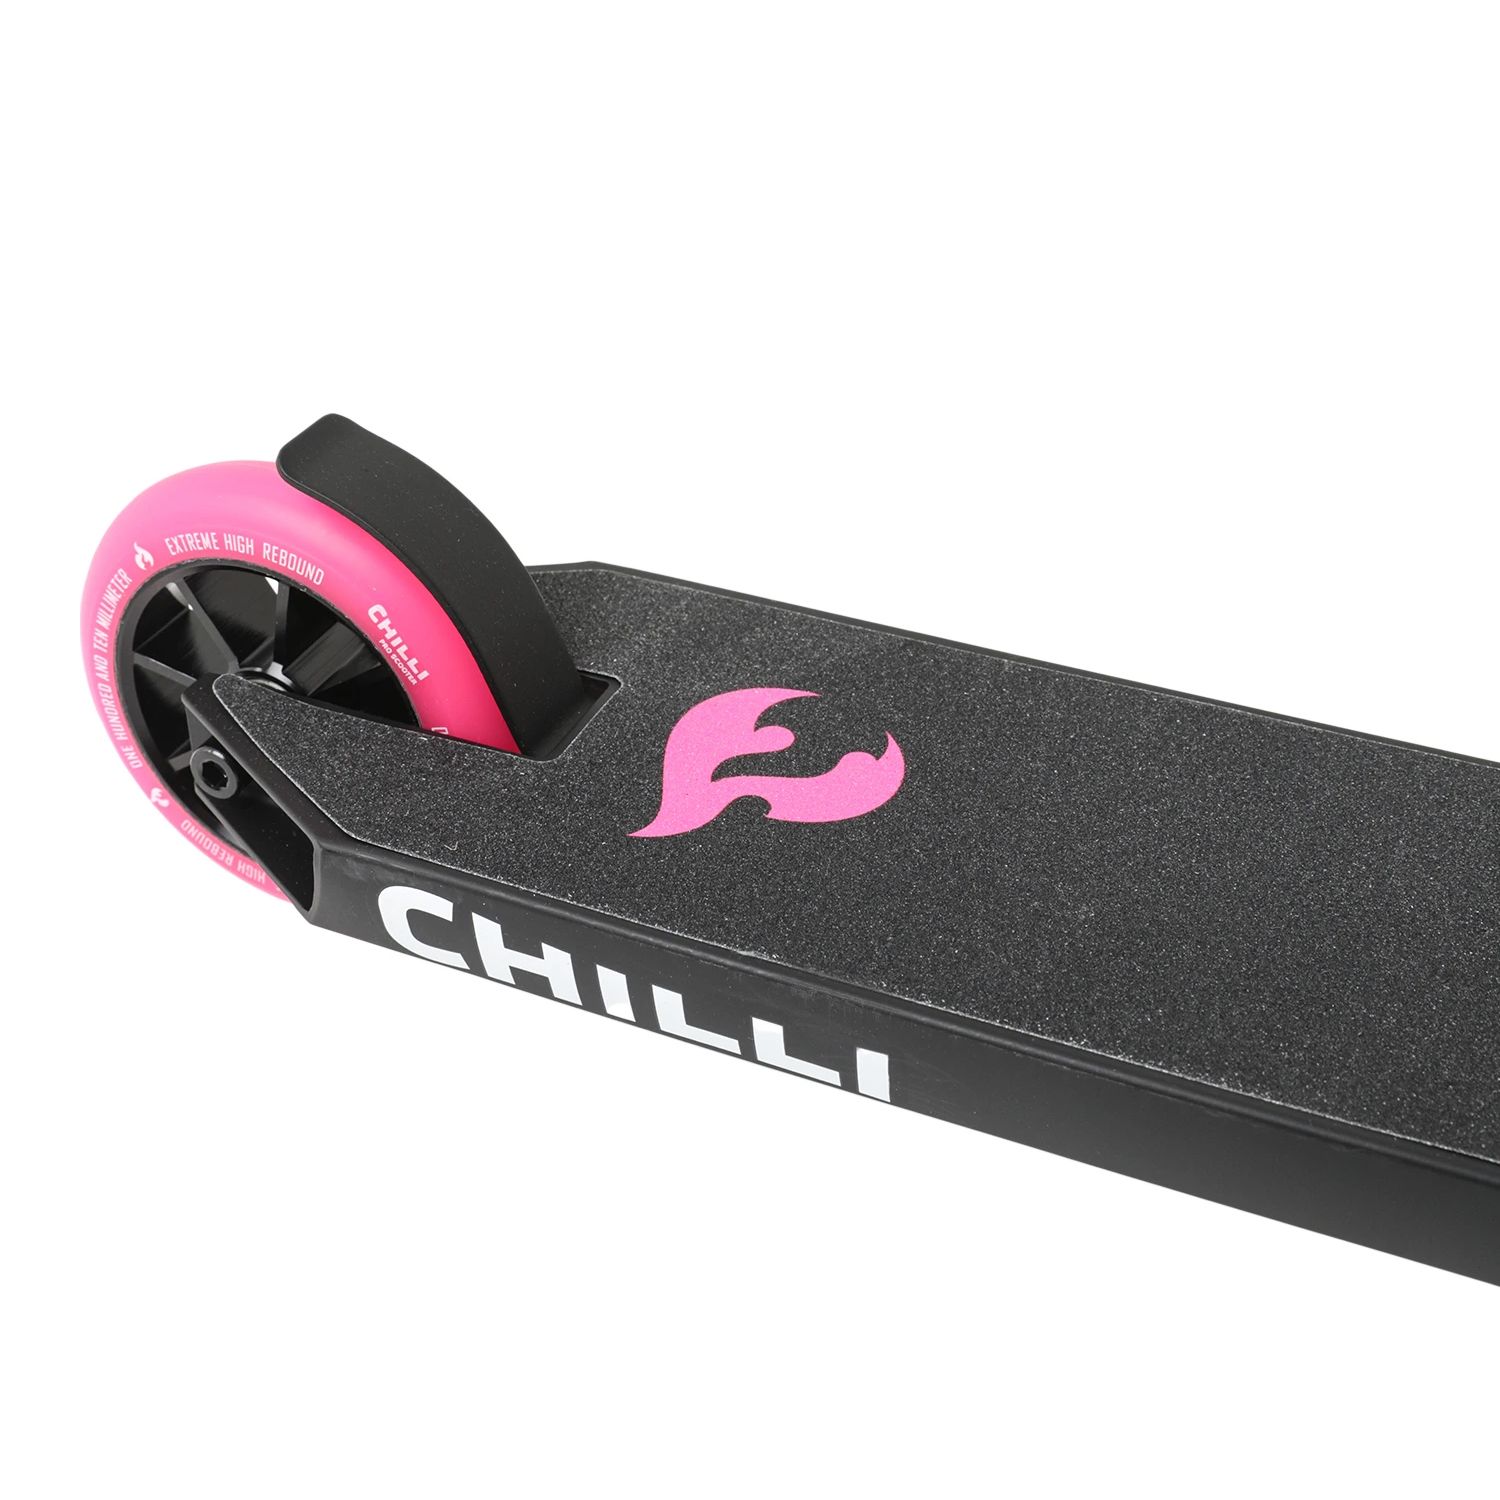 Самокат Chilli Pro Scooter Base Black/Pink